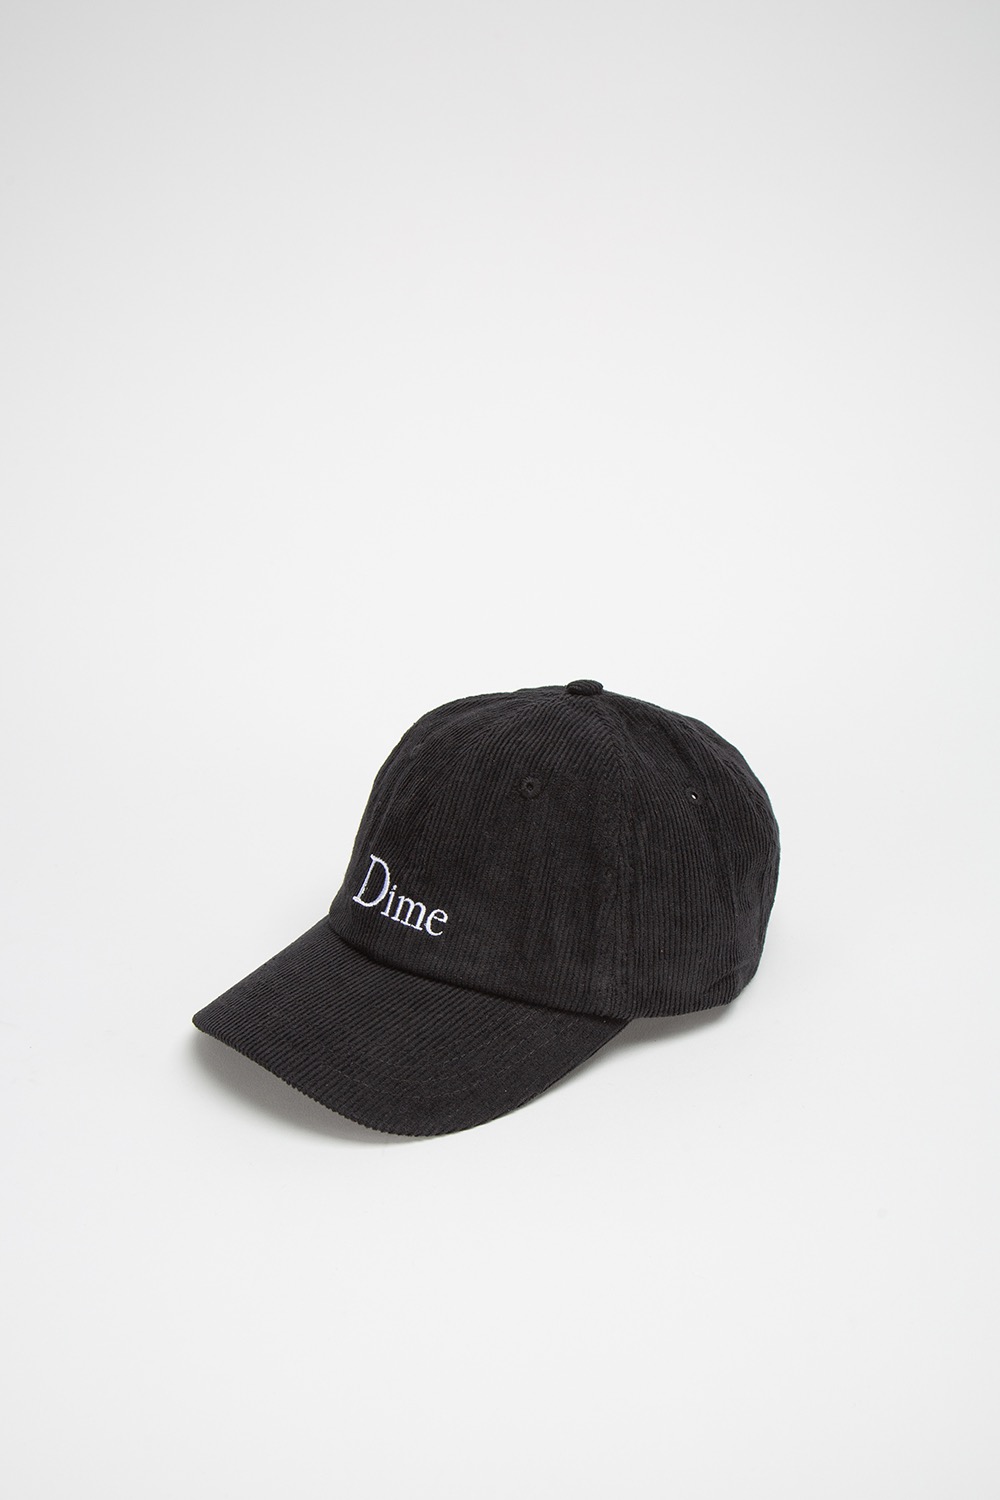 DIME CLASSIC CORDUROY CAP BLACK